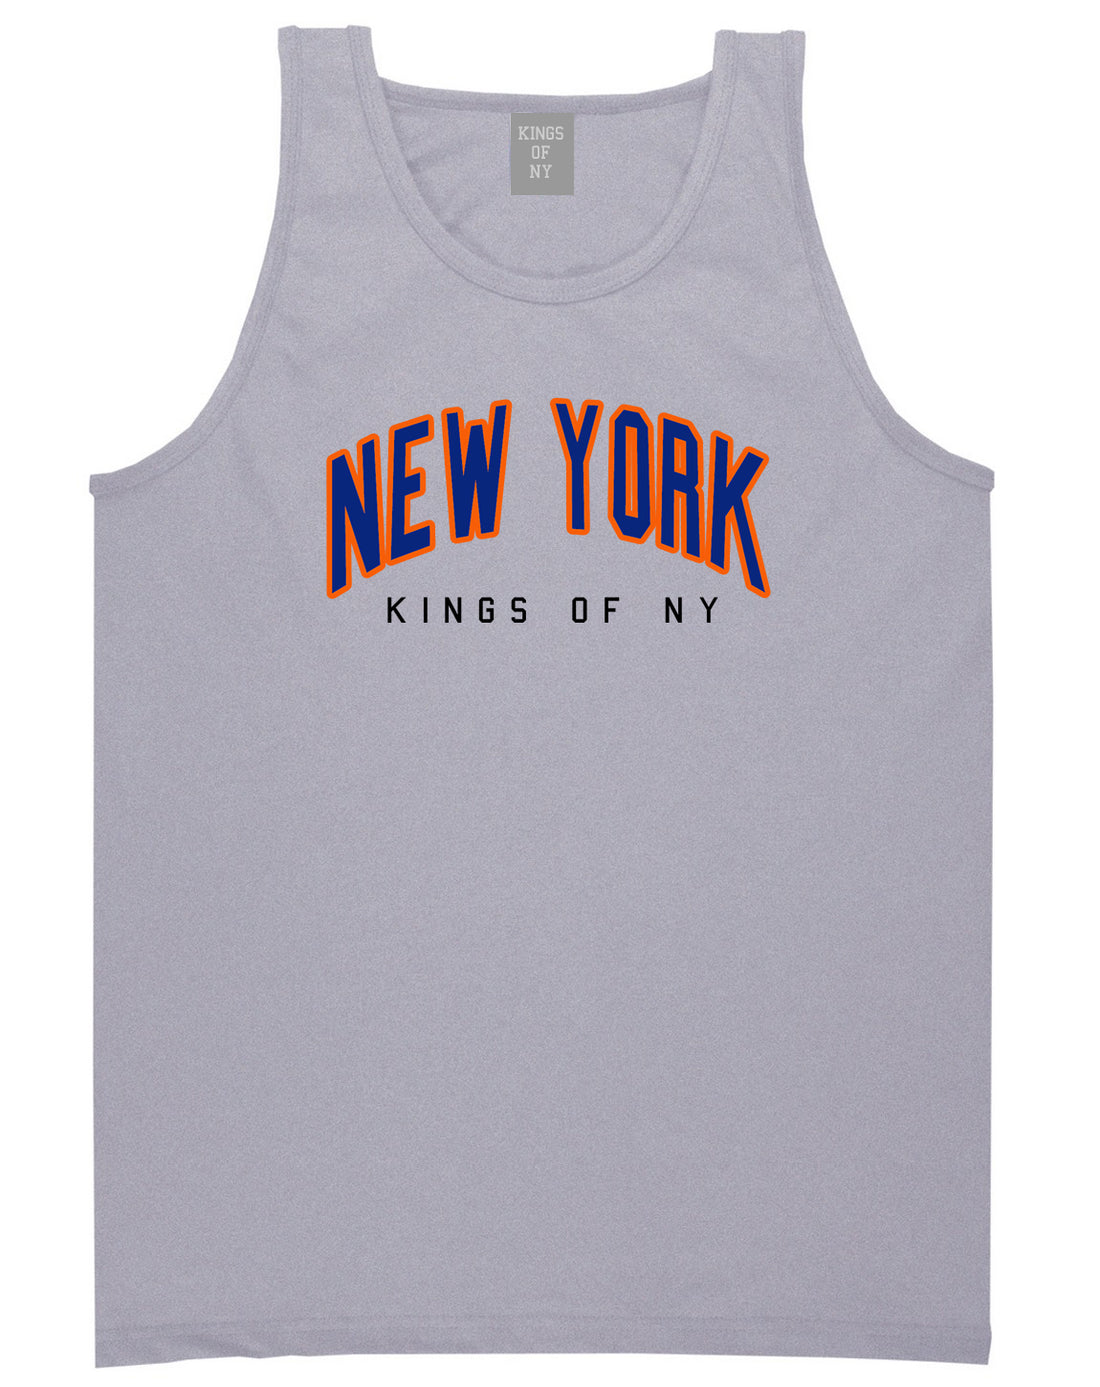 New York Blue And Orange Mens Tank Top Shirt Grey by Kings Of NY